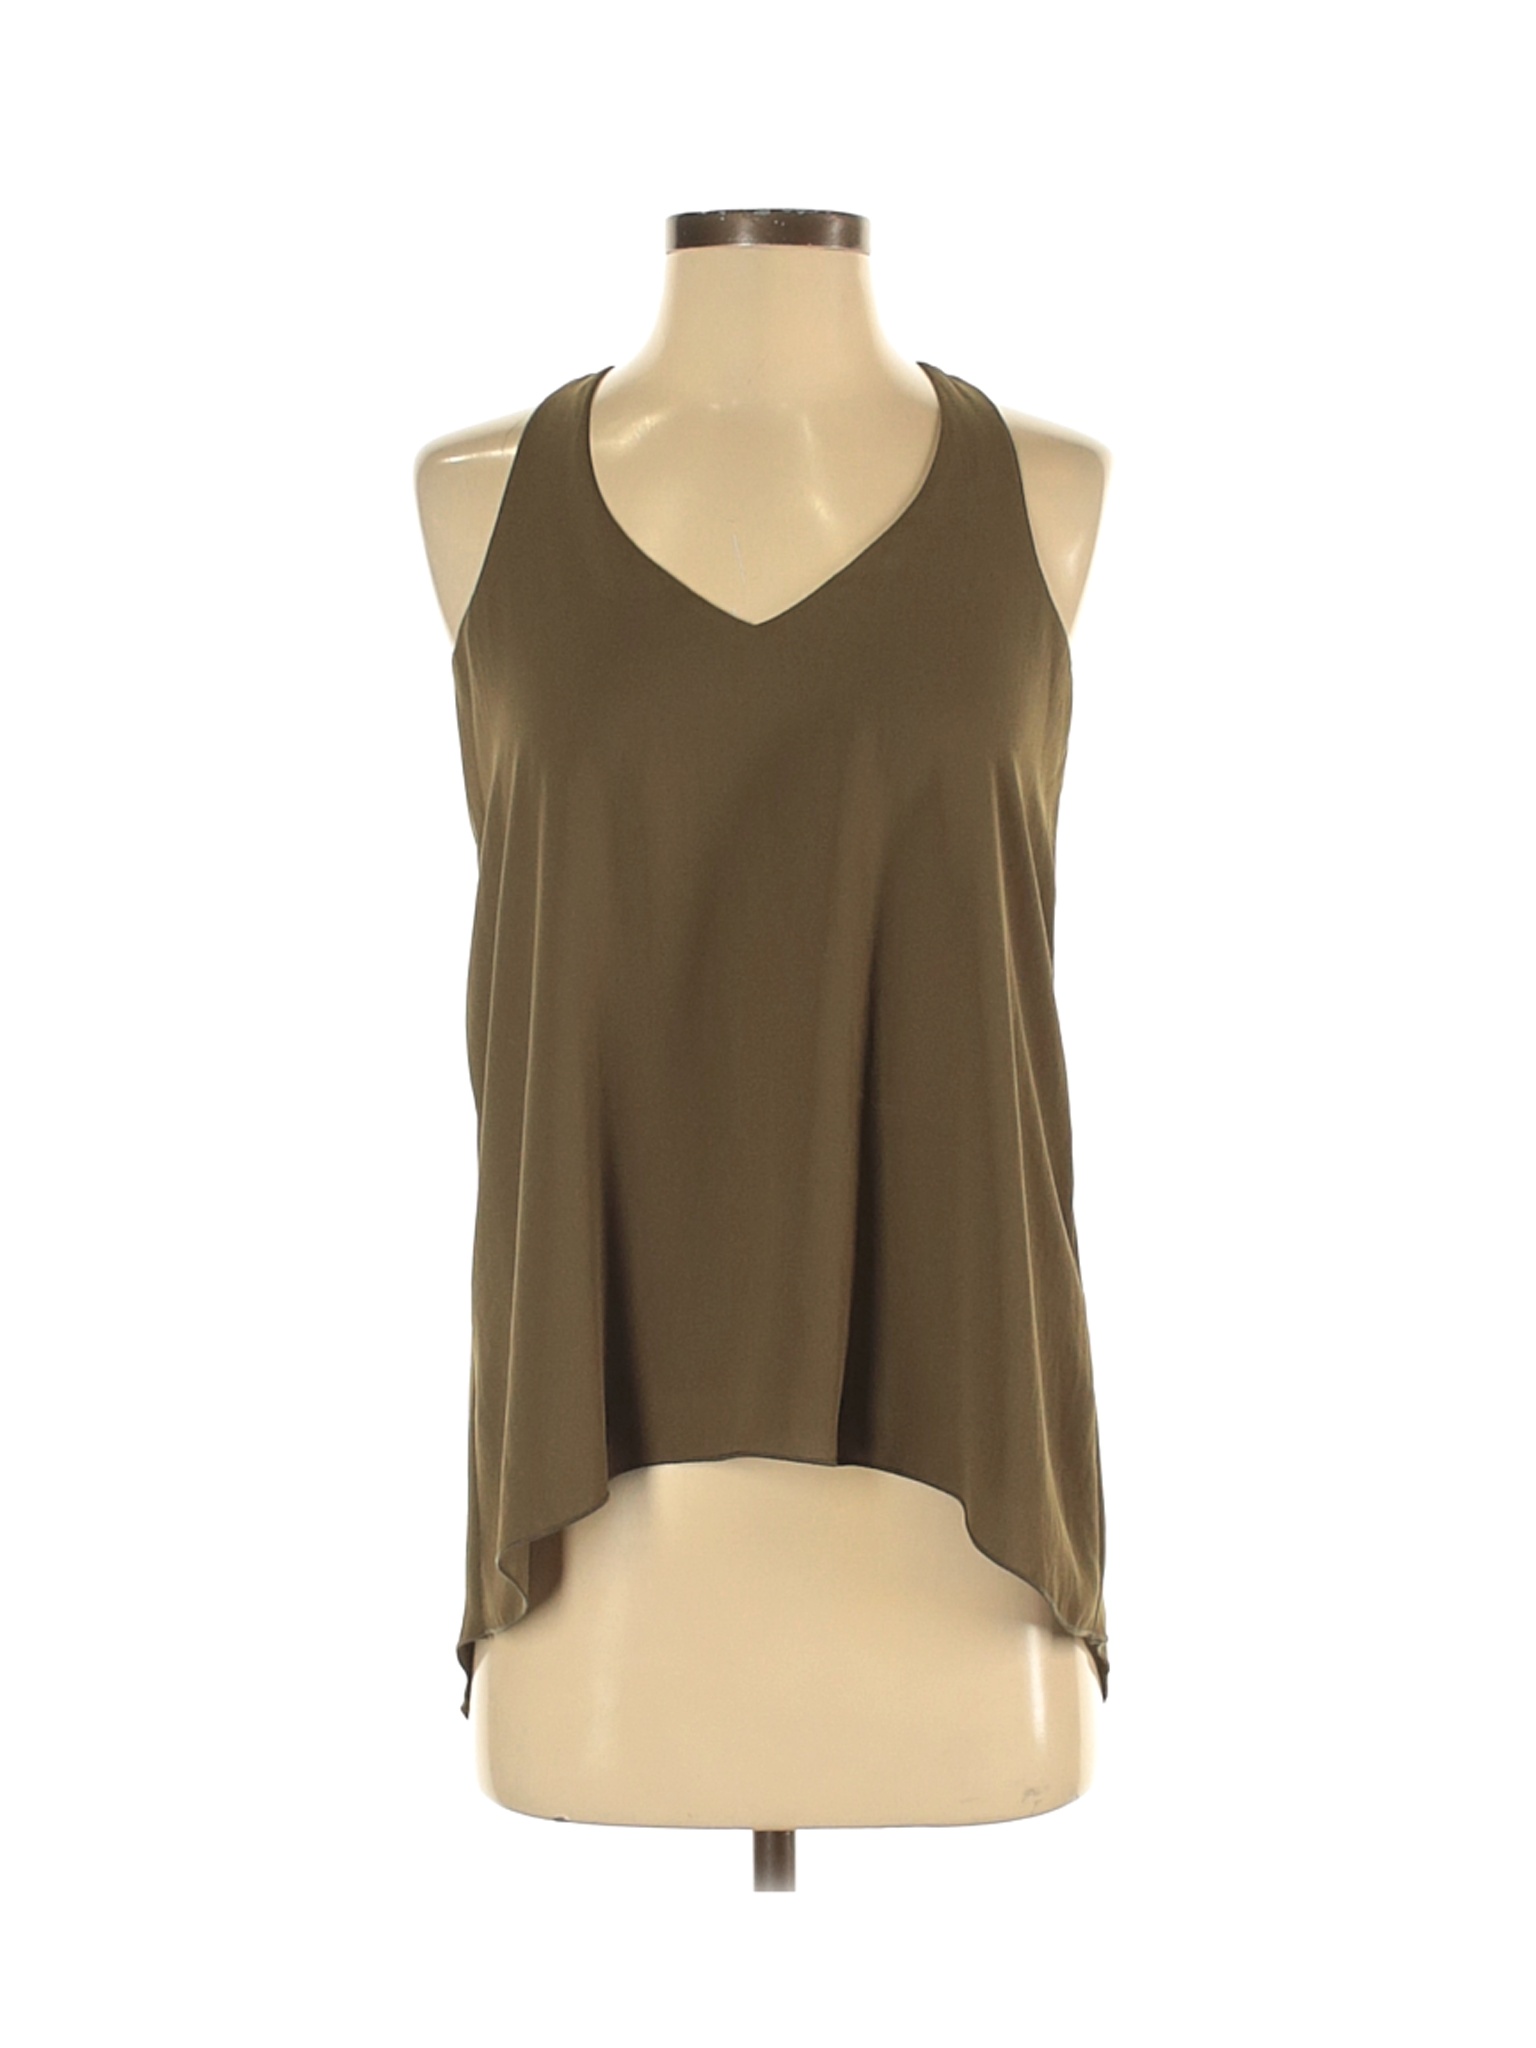 NWT Allison Joy Women Green Sleeveless Blouse XS | eBay